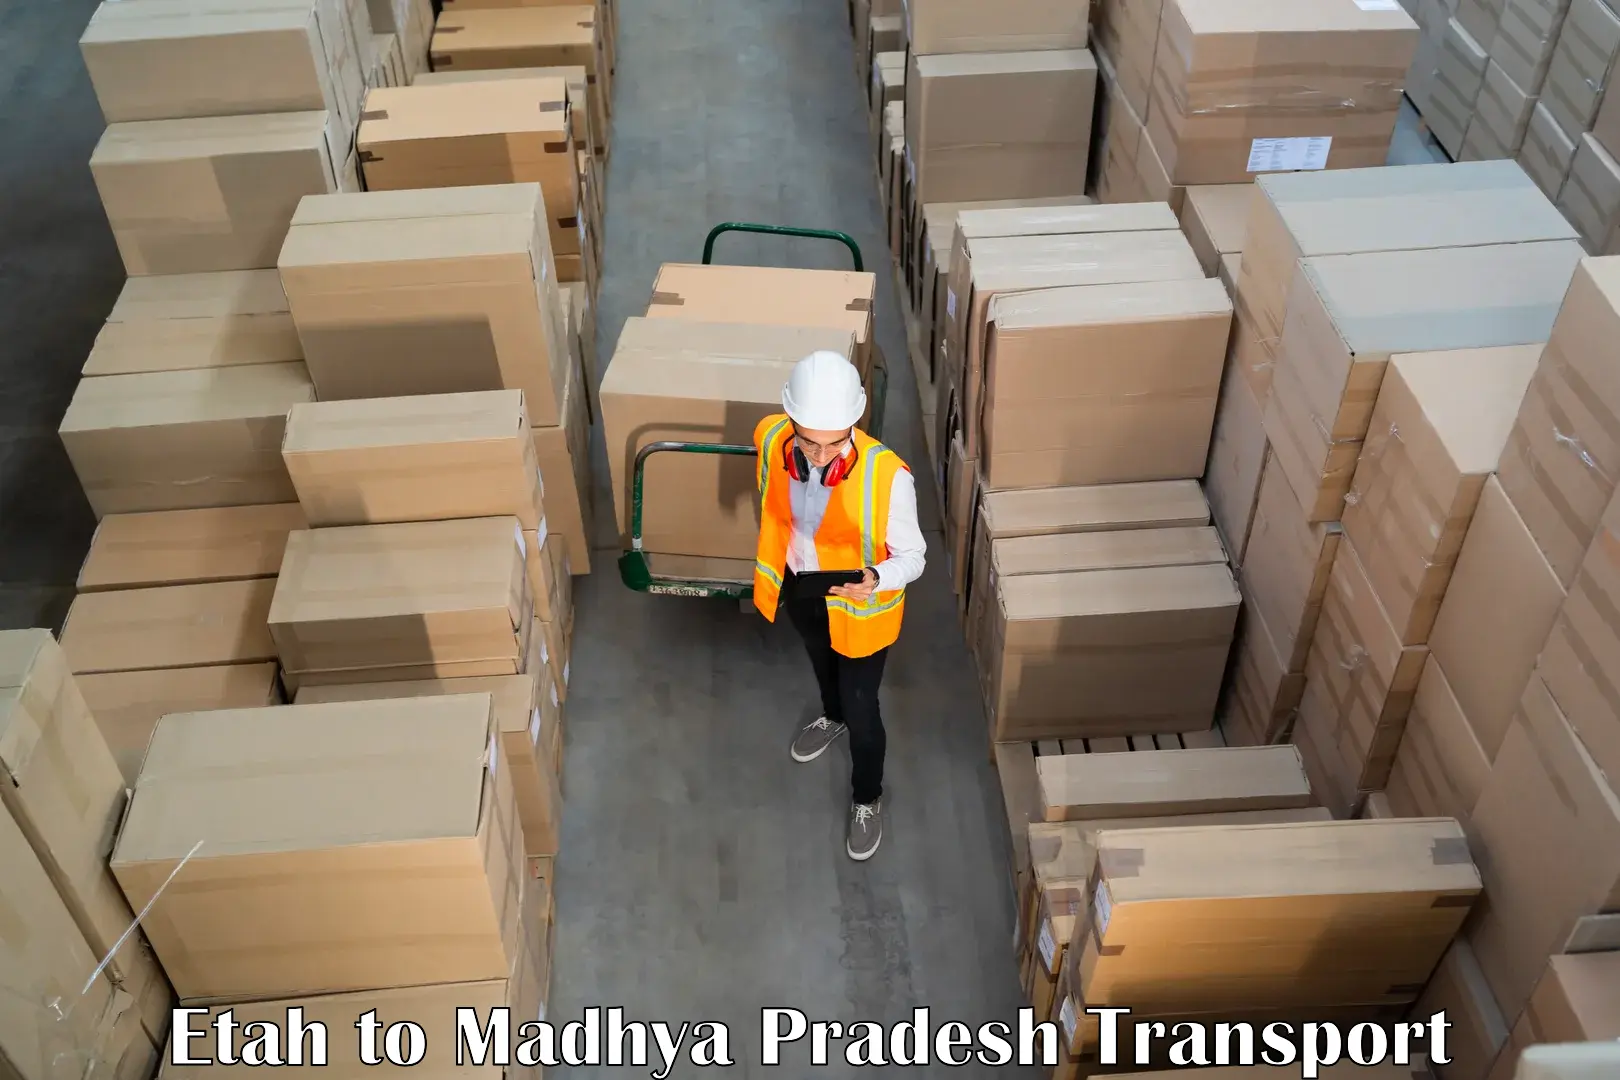 Vehicle transport services Etah to Chandla